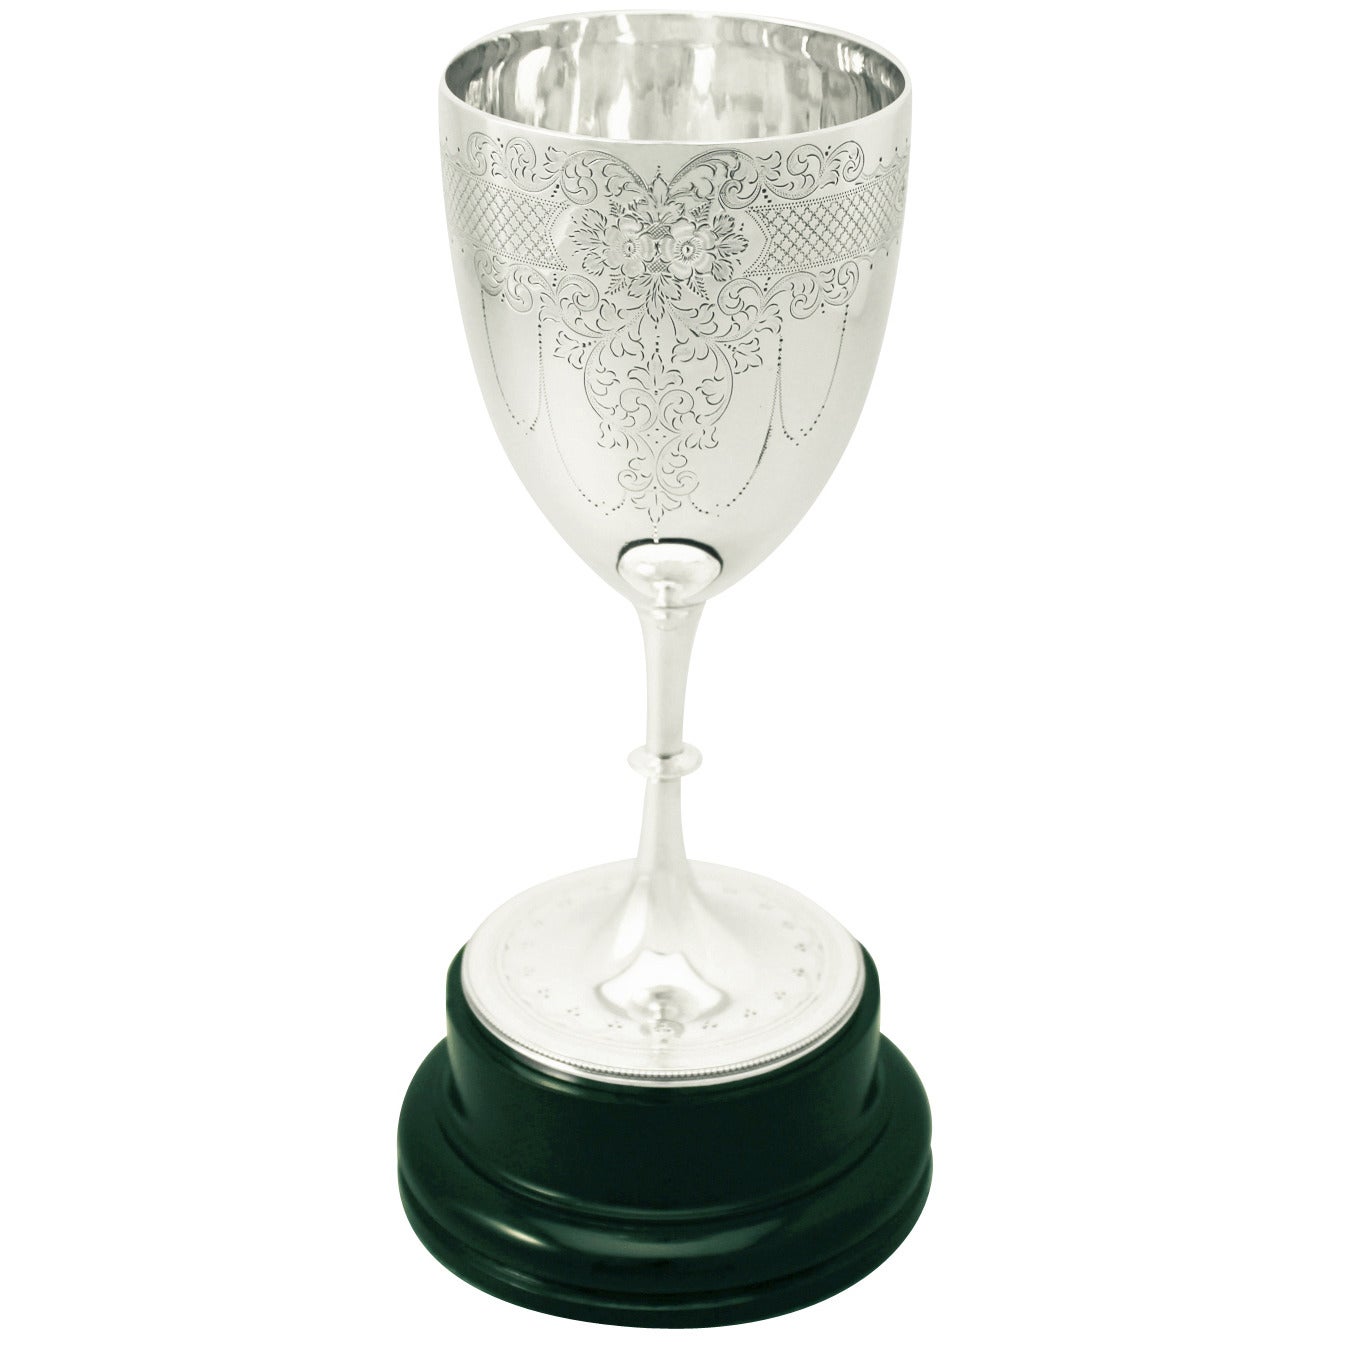 Sterling Silver Presentation Cup - Antique Edwardian